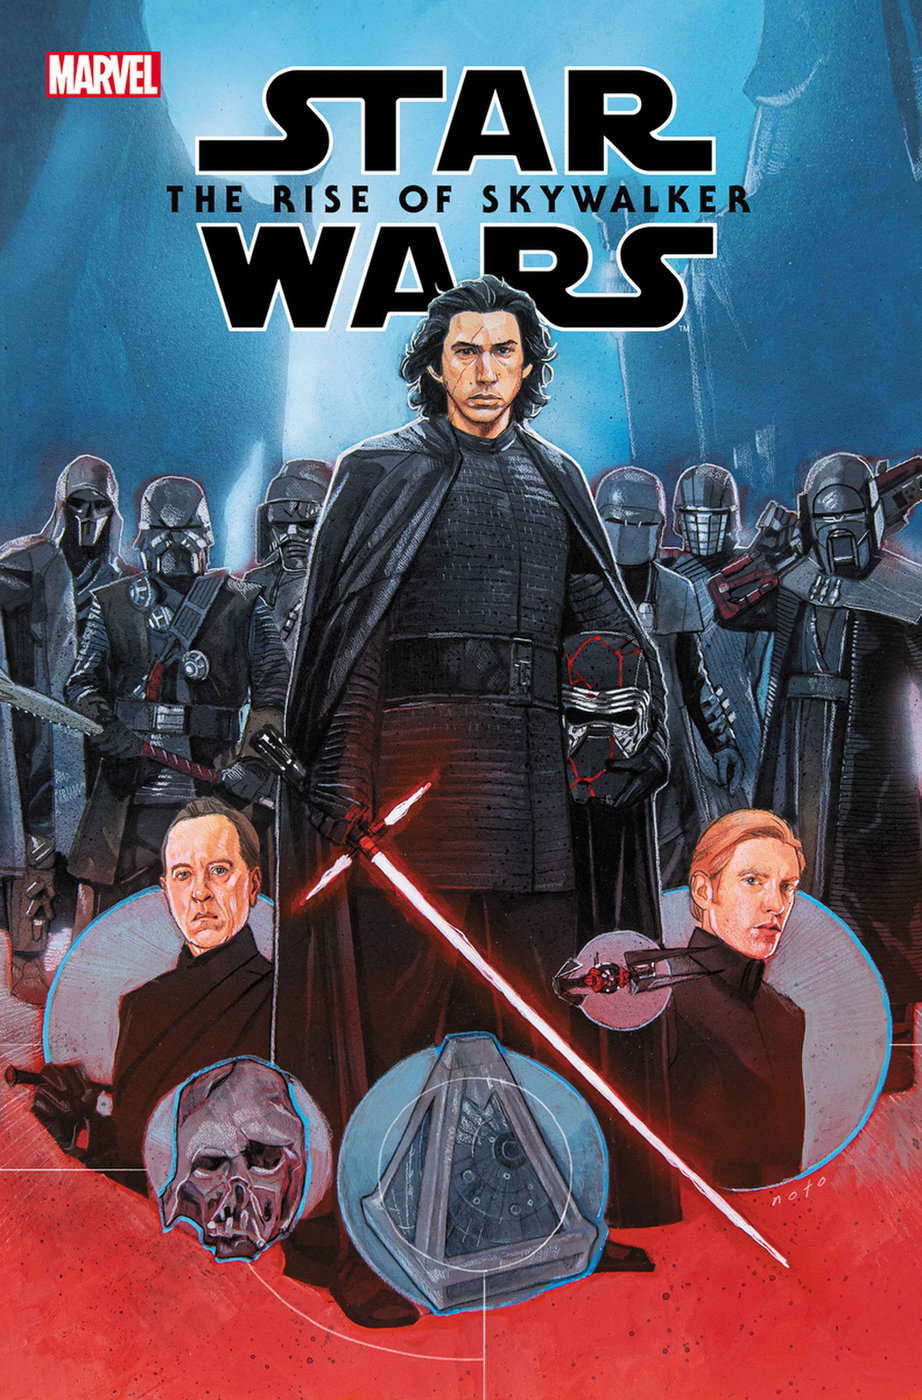 Star Wars: Episode IX The Rise of Skywalker, Wookieepedia